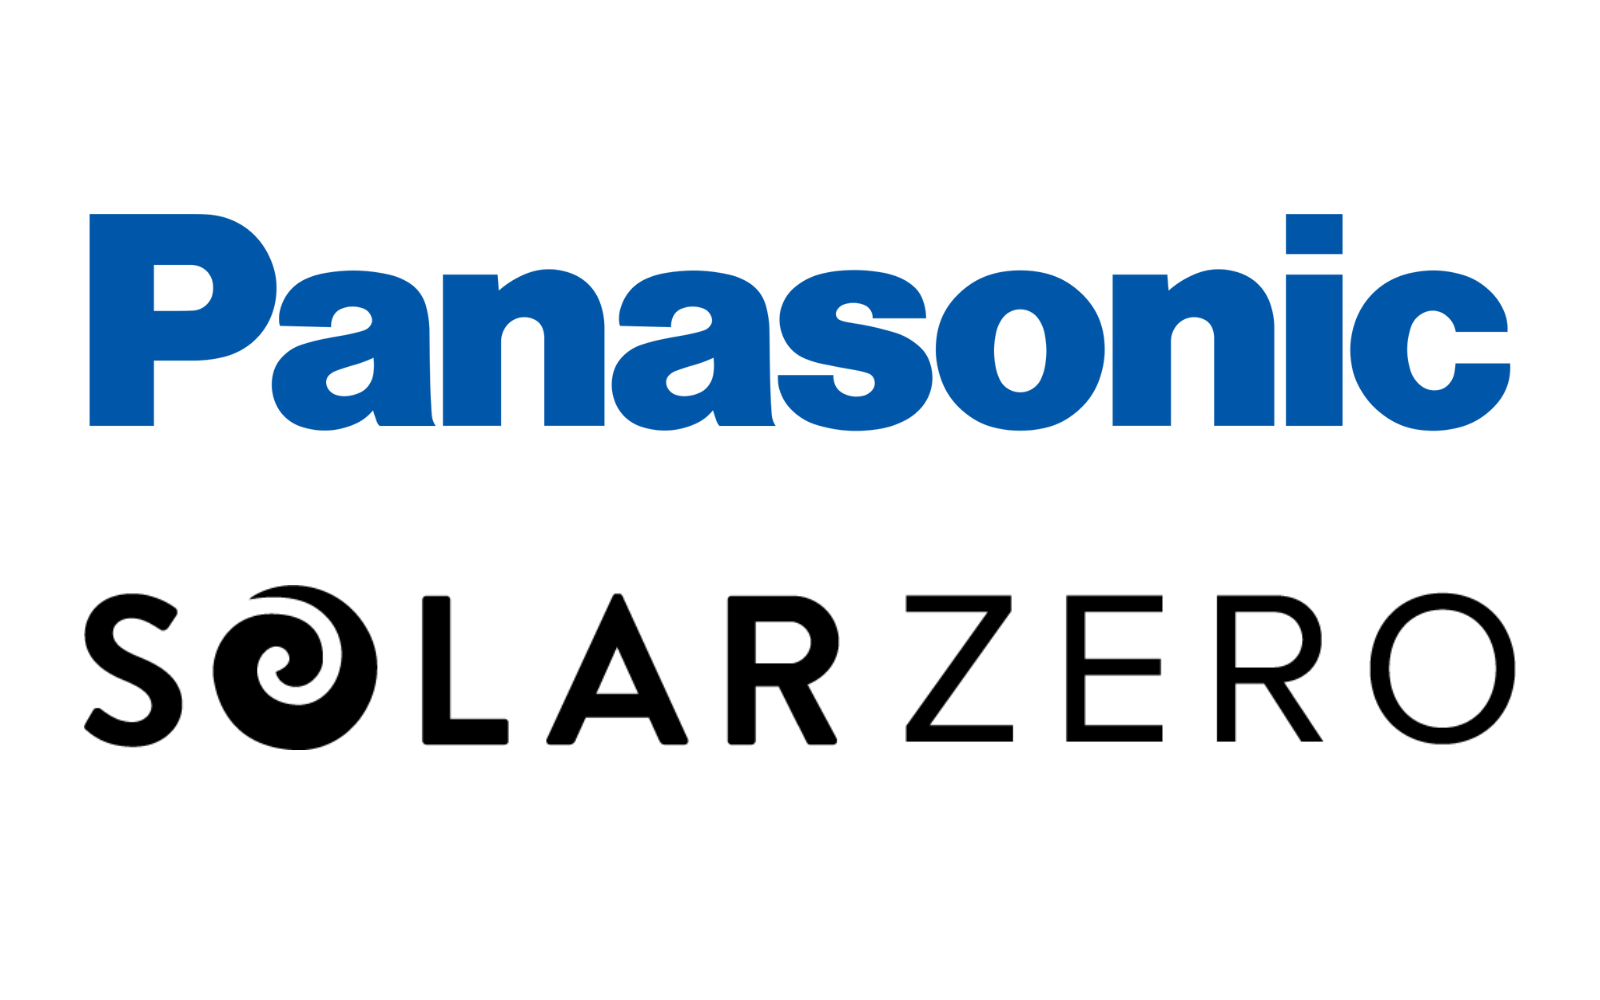 Panasonic and solarZero